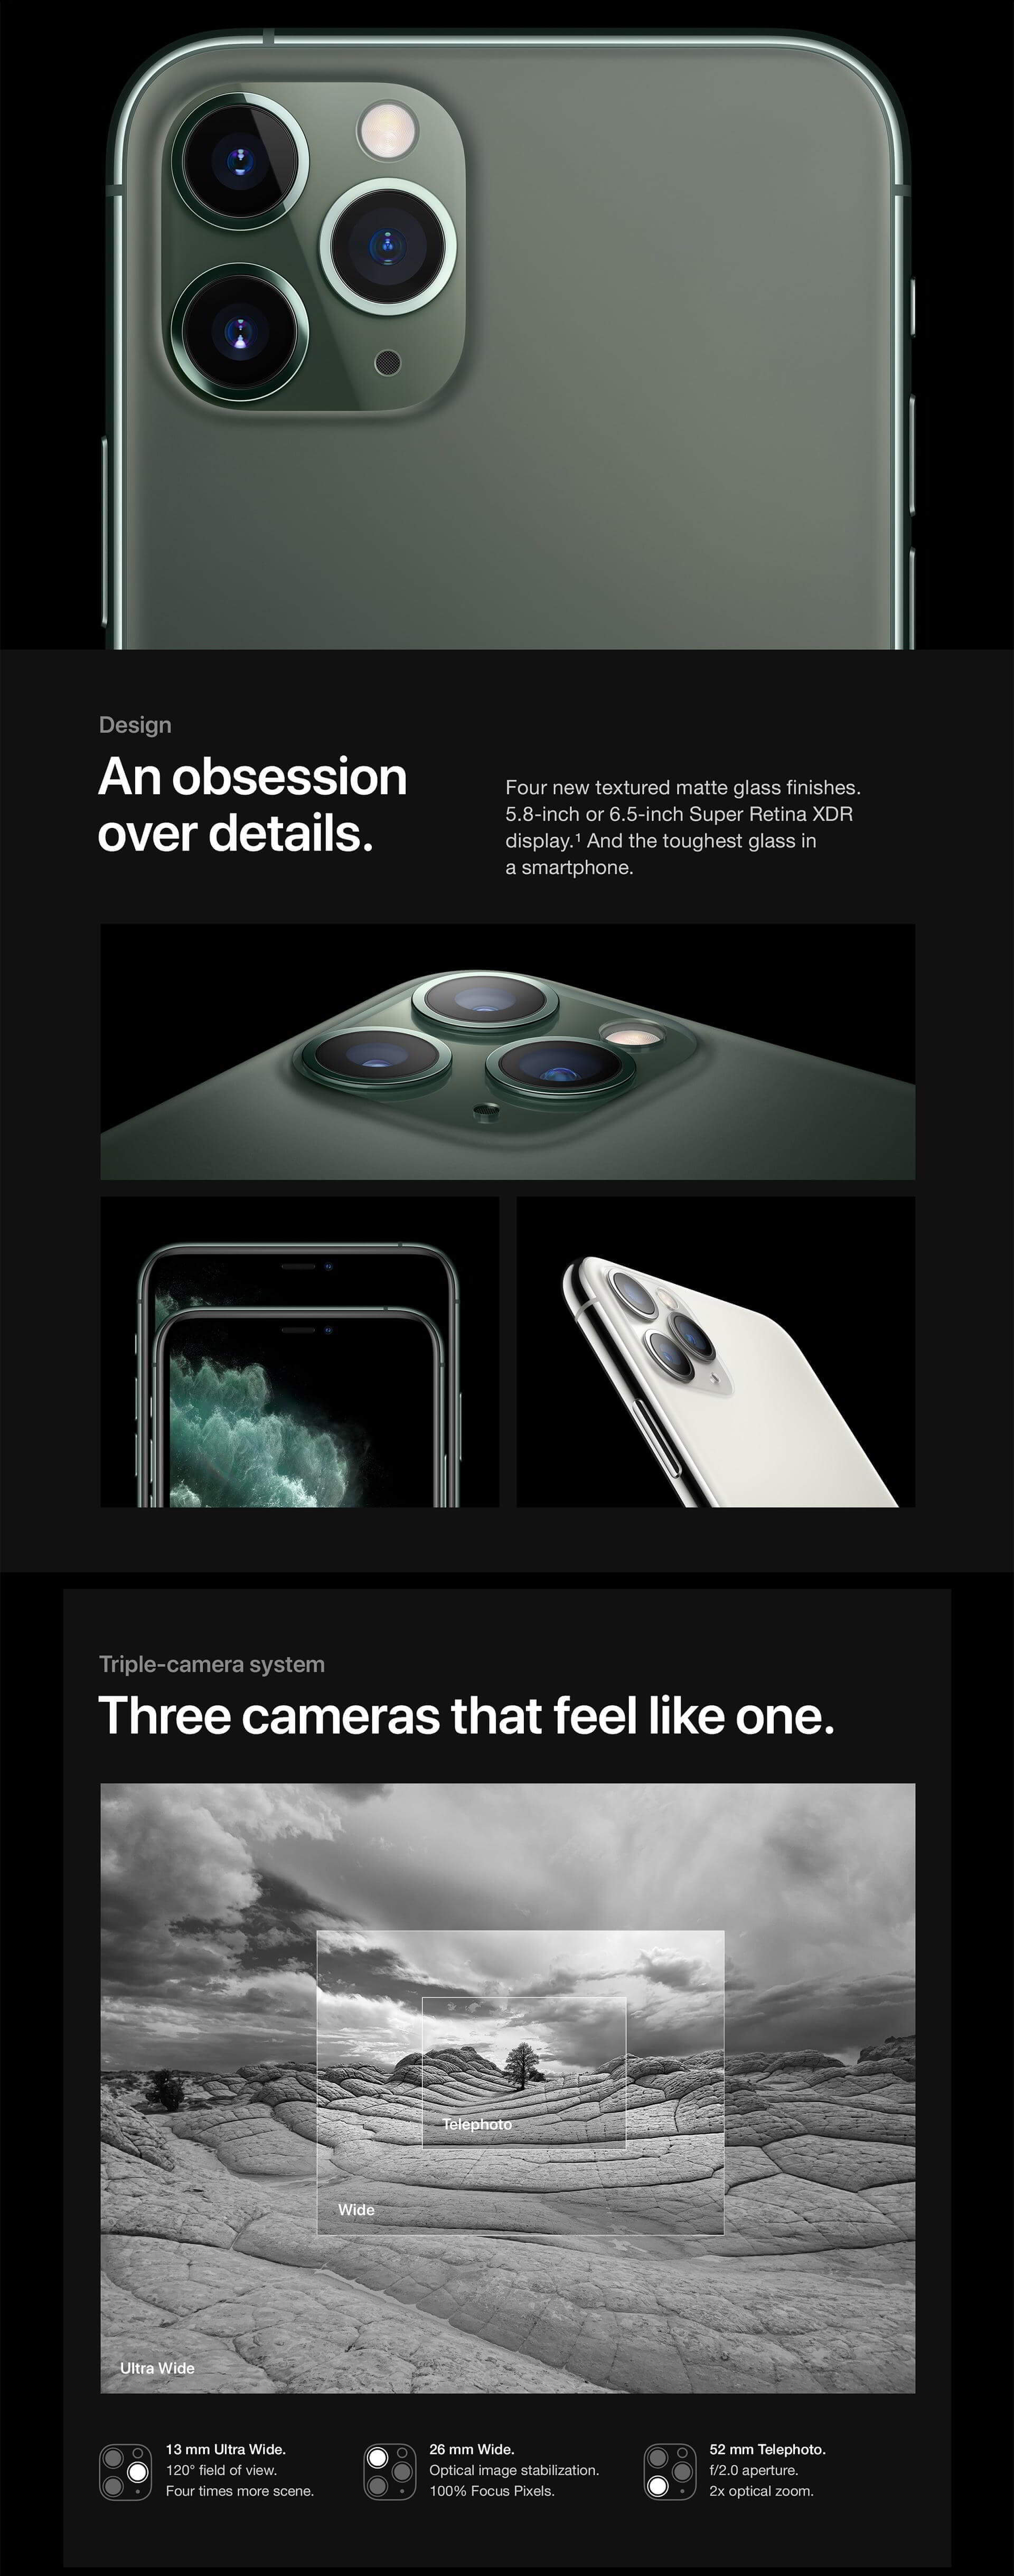 apple-iphone11-pro-max-price-etisalat-uae-overview-2